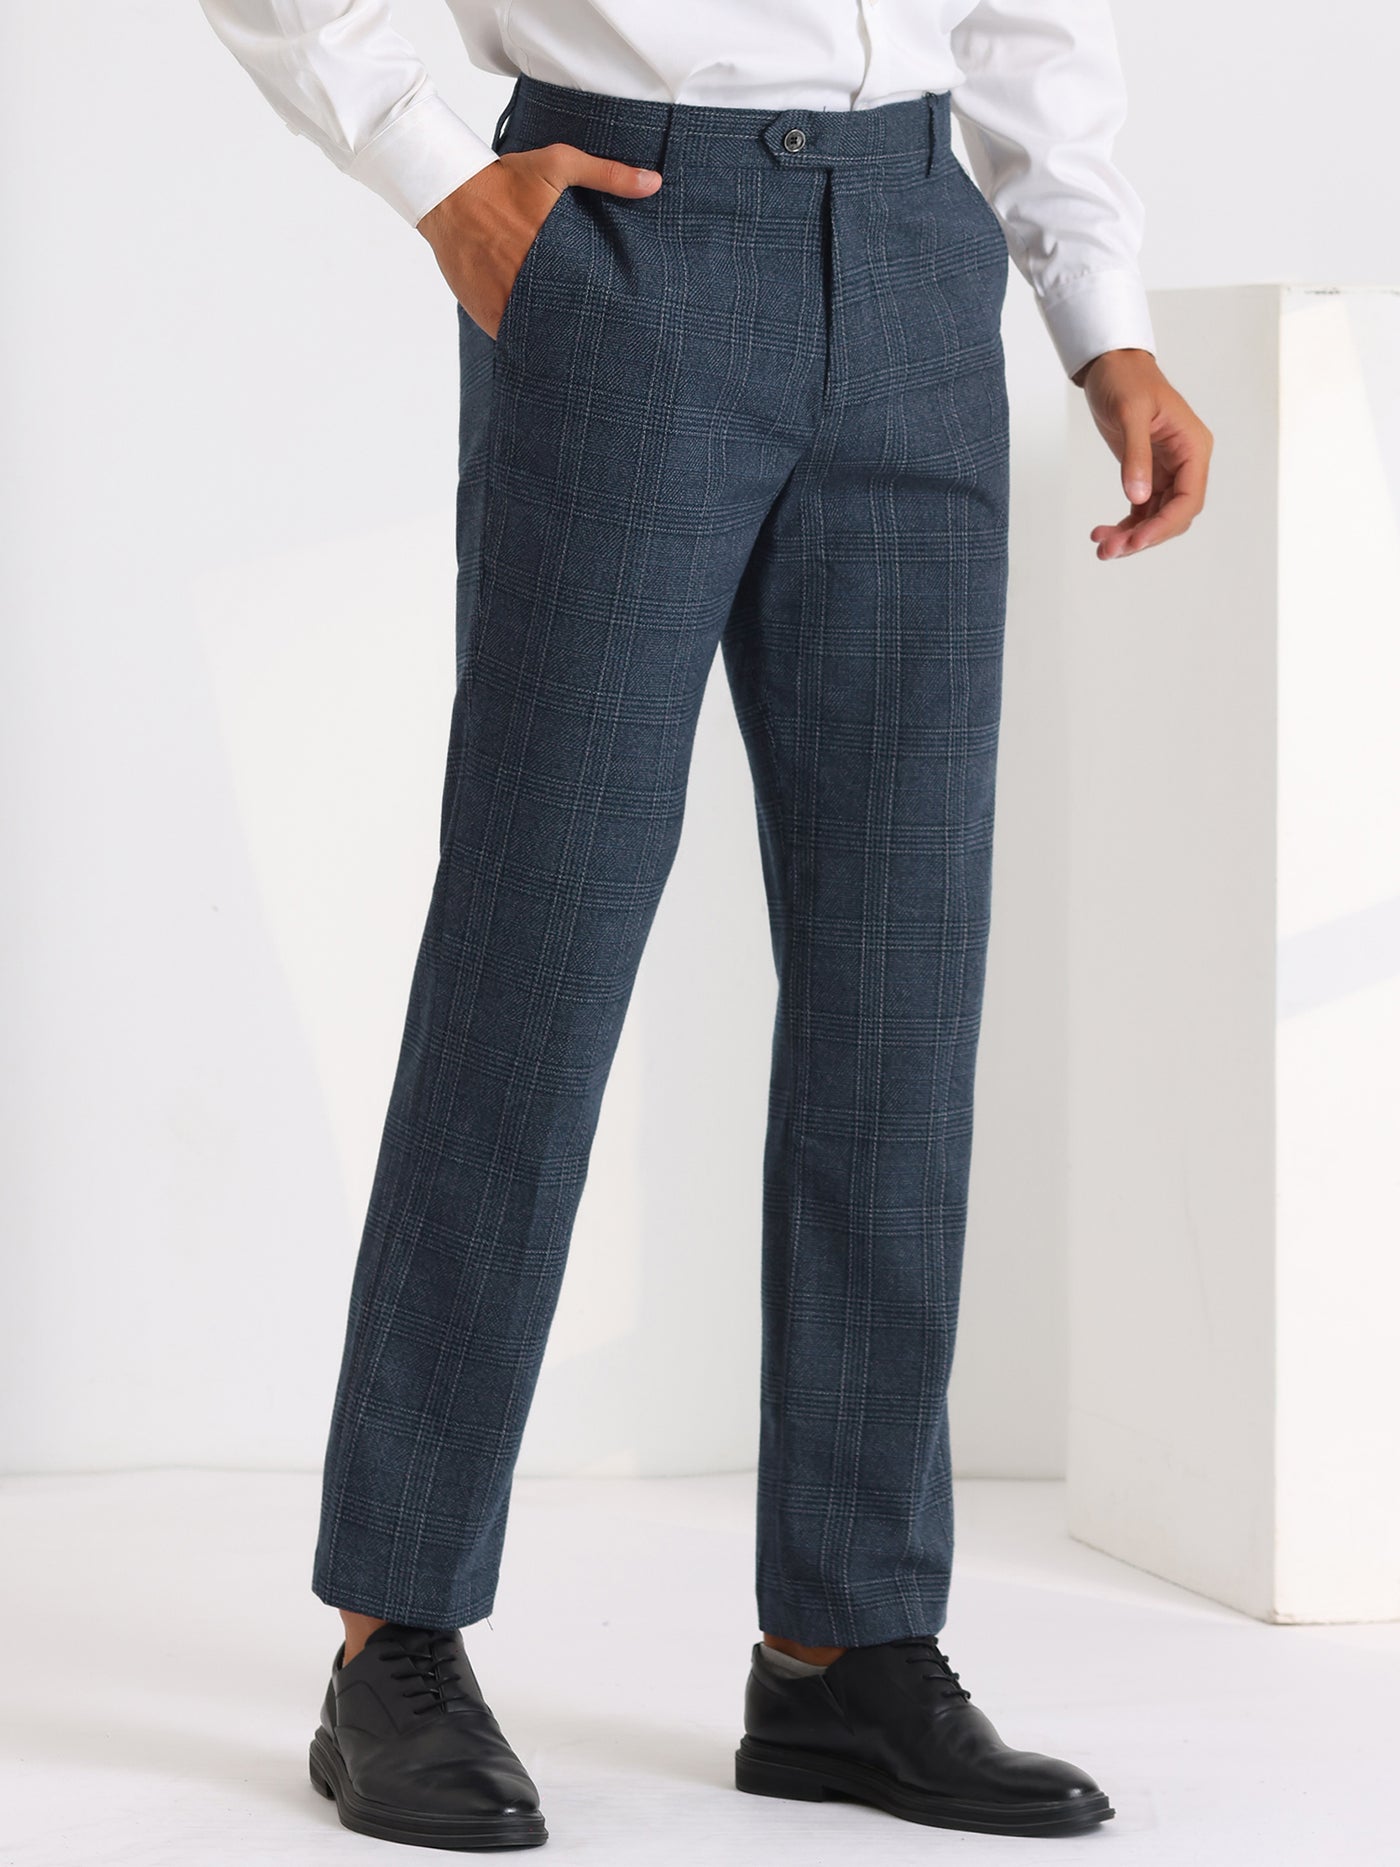 Bublédon Dress Plaid Pants for Men's Slim Fit Wedding Tartan Patterned Chino Trousers